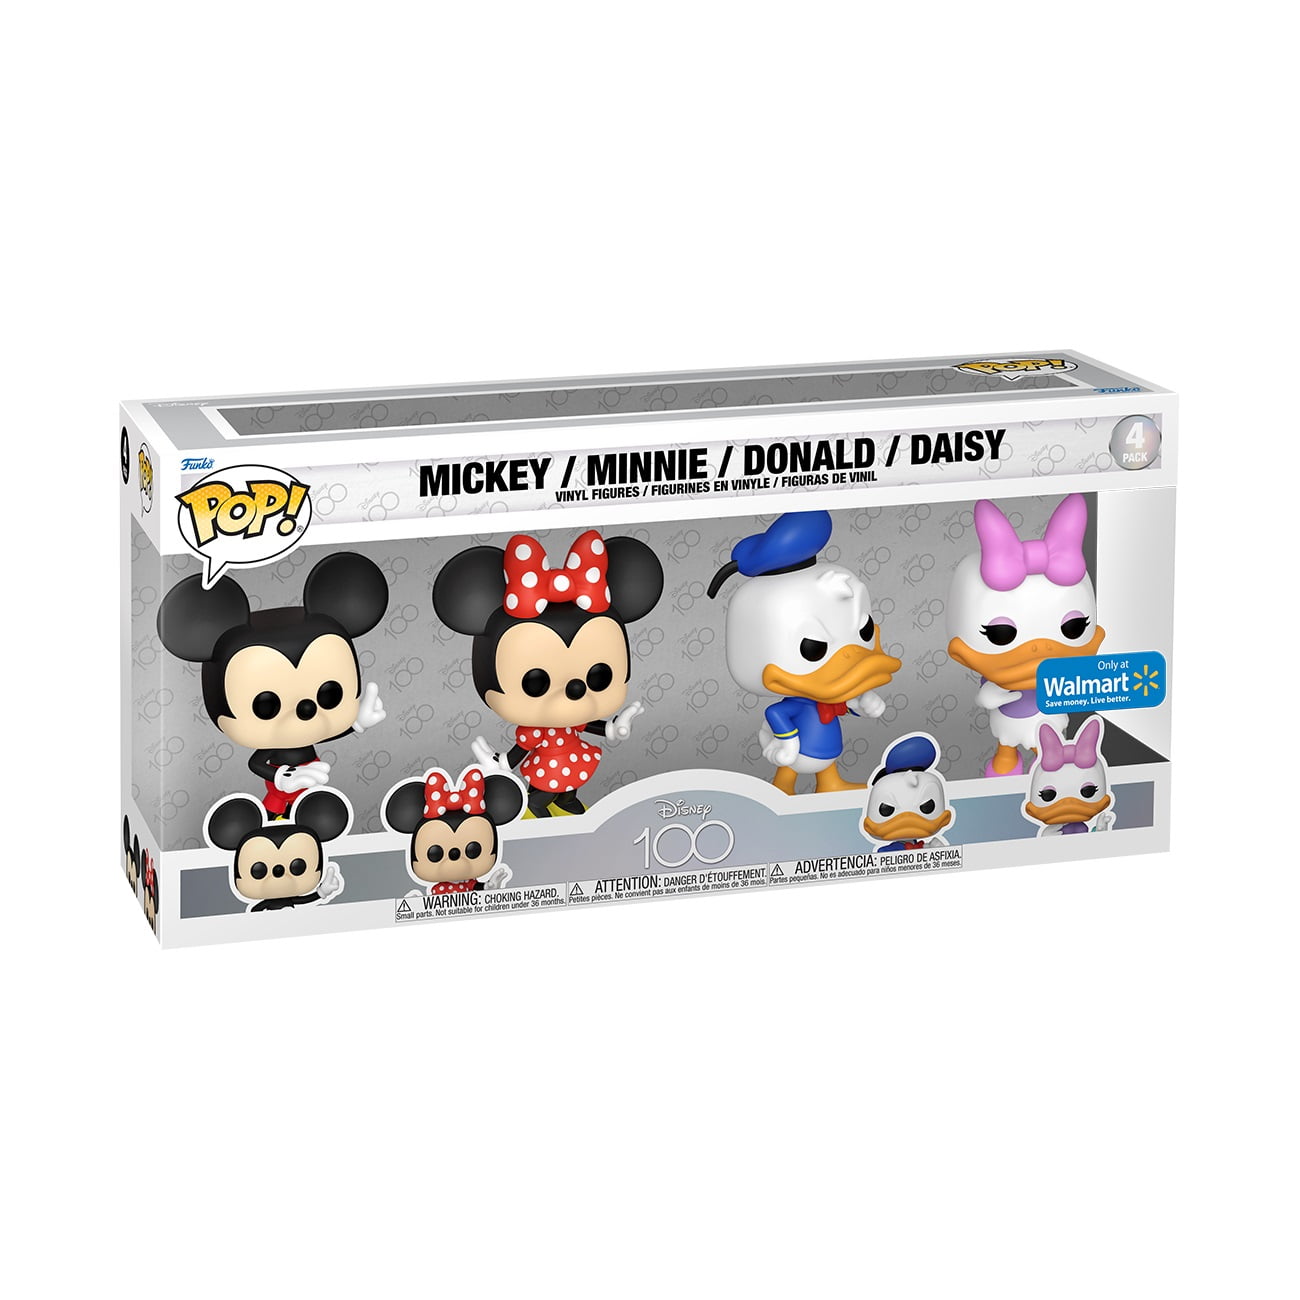 Pop! Disney Mickey and Friends (The Classics) Vinyl Figure Daisy